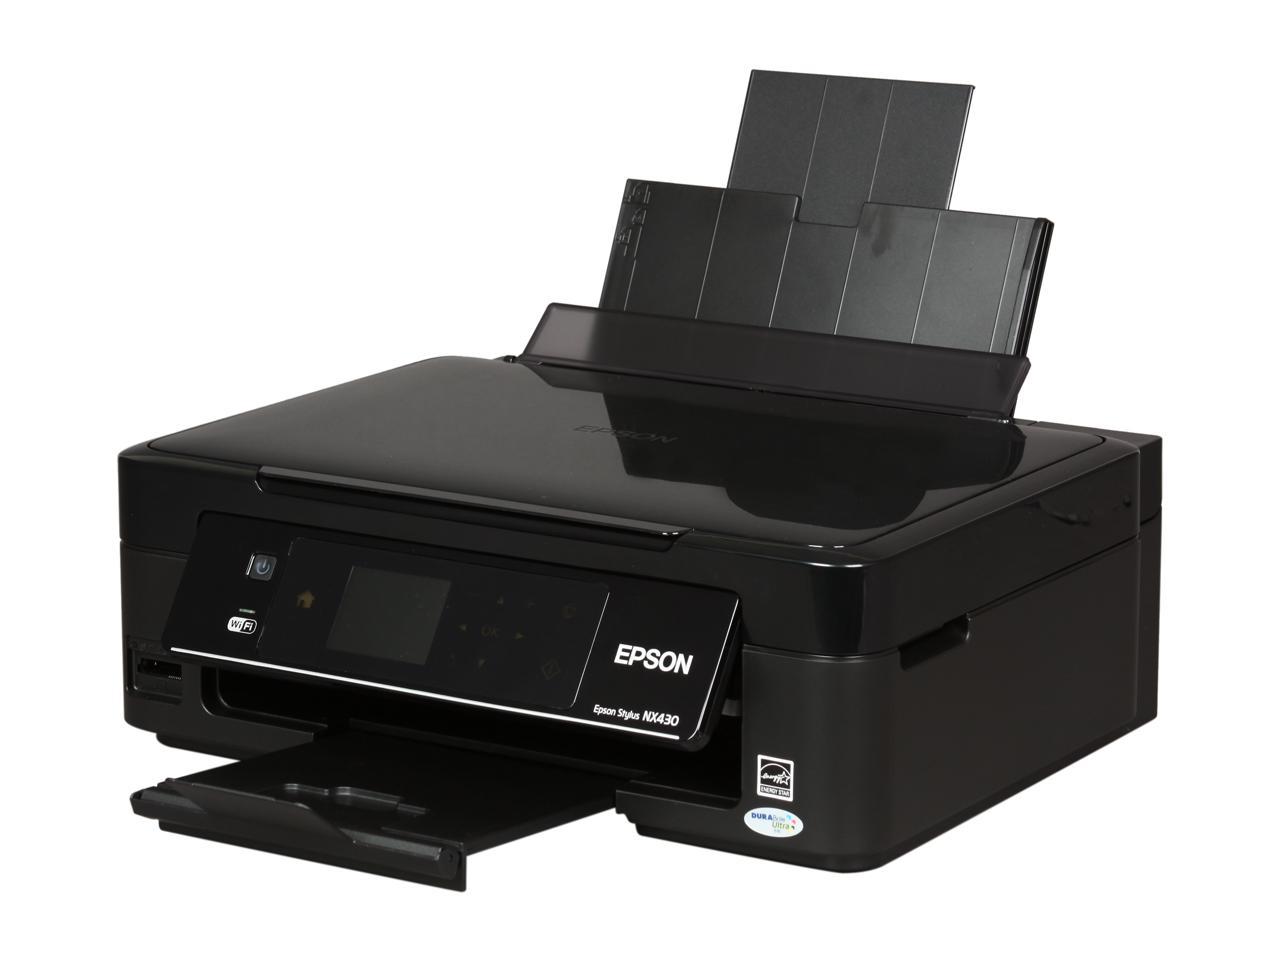 Epson Stylus Nx430 C11cb22201 Wireless Micropiezo Inkjet Small In One Color Printer Newegg Com